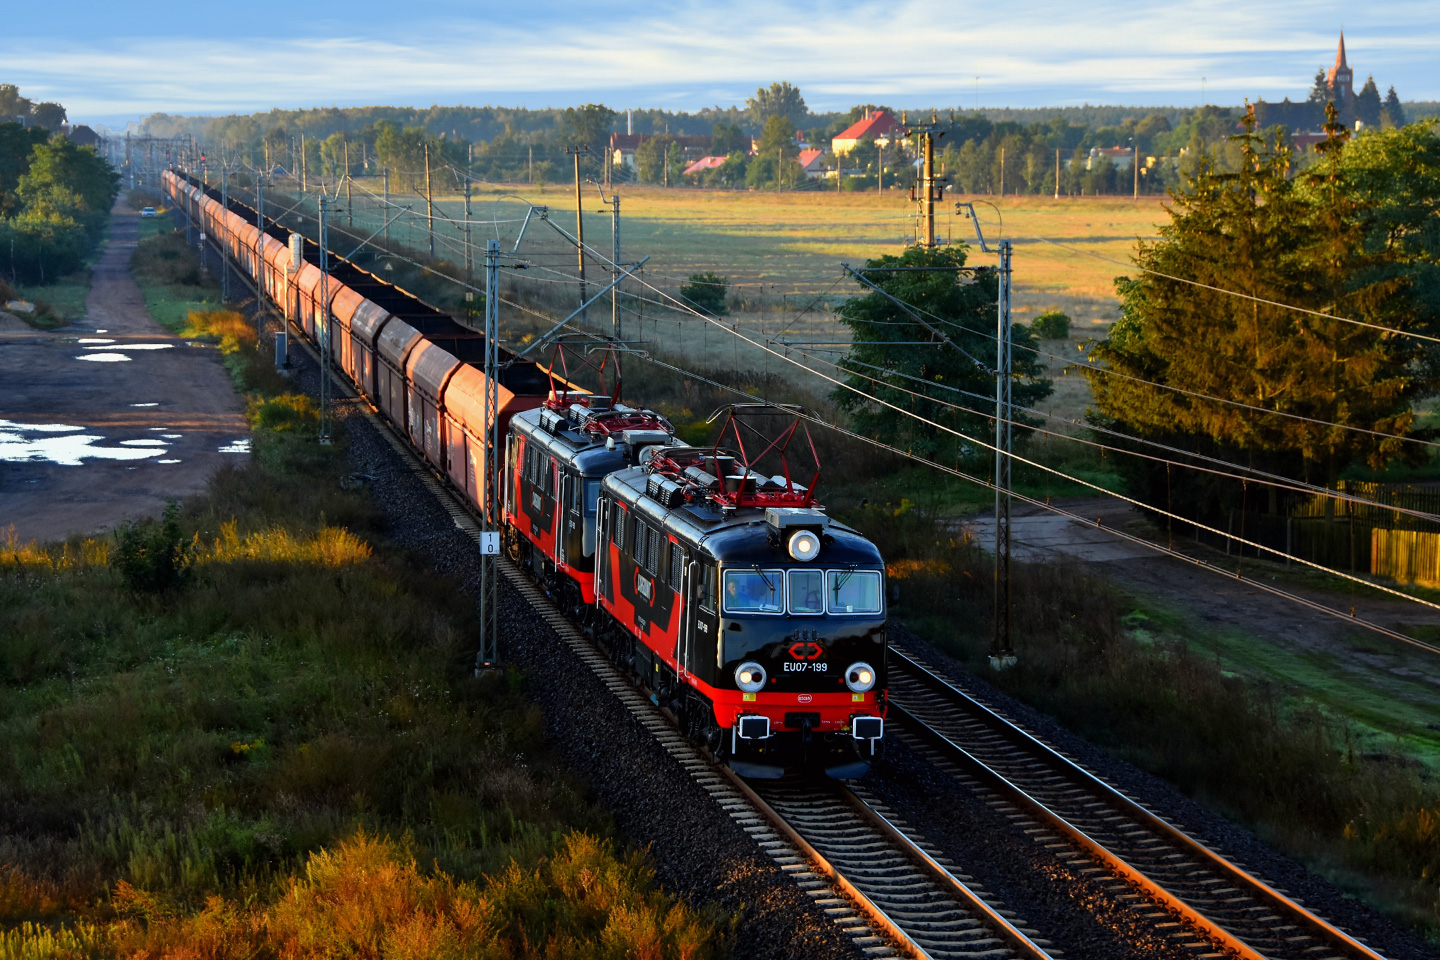 image of a train on tracks